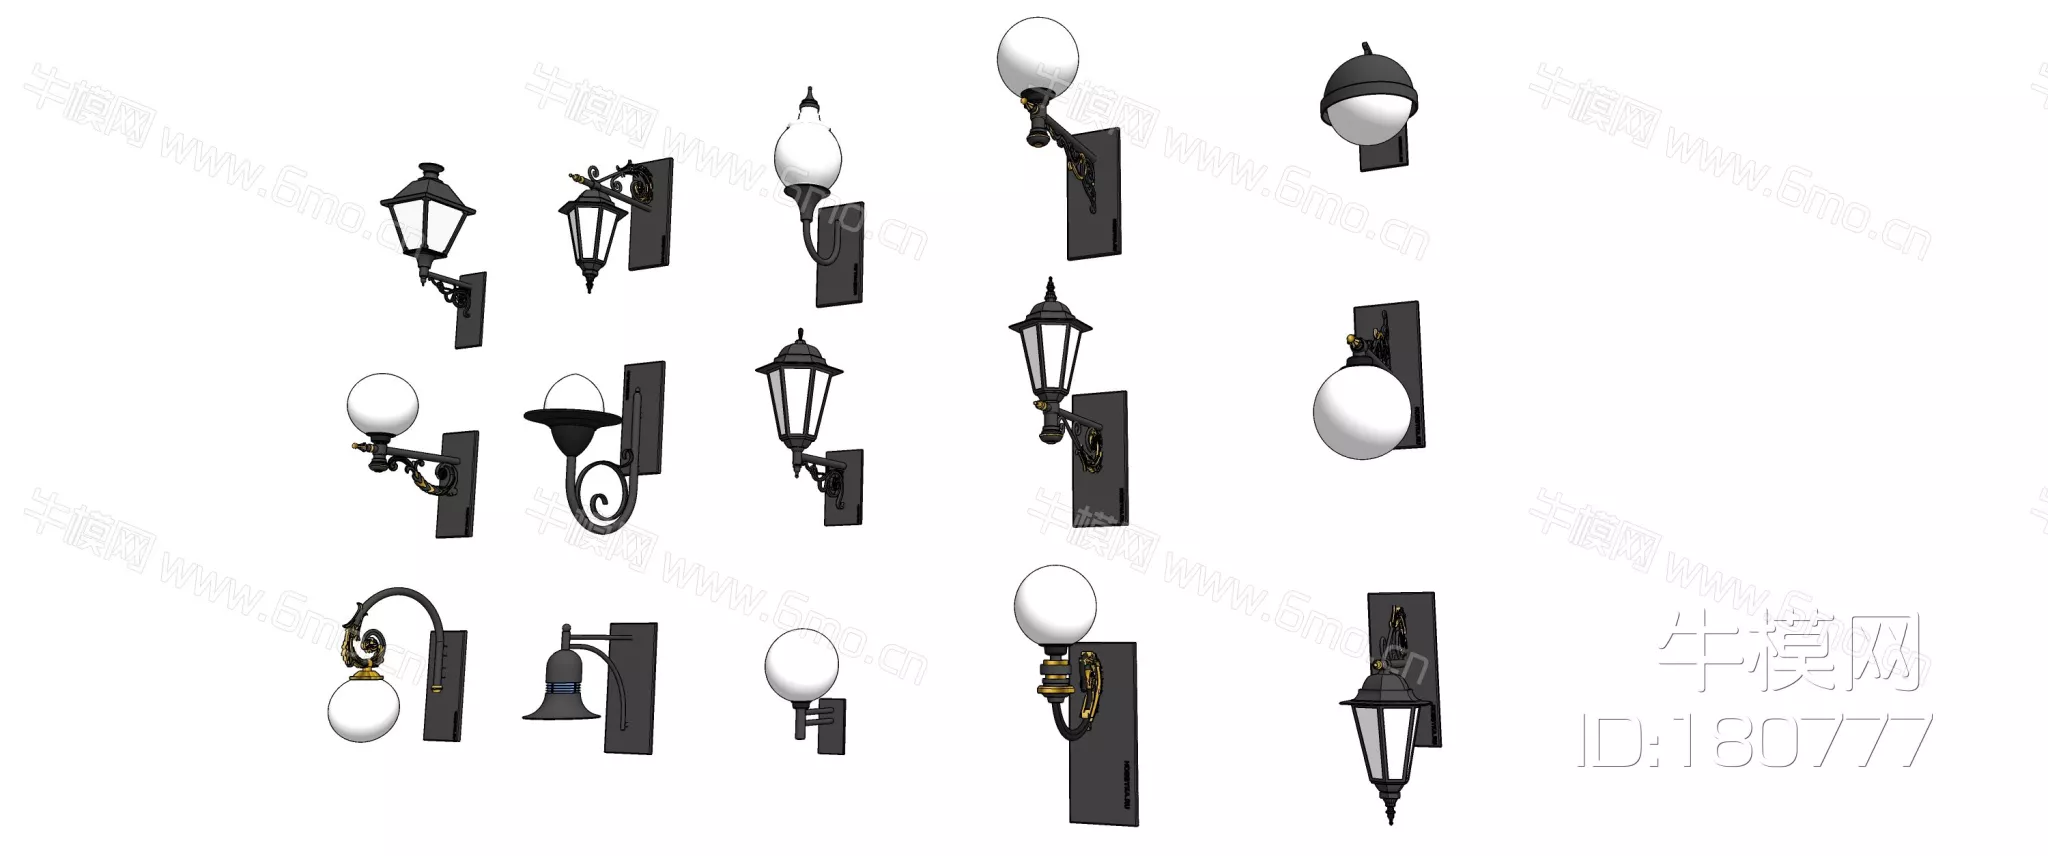 MODERN WALL LAMP - SKETCHUP 3D MODEL - ENSCAPE - 180777